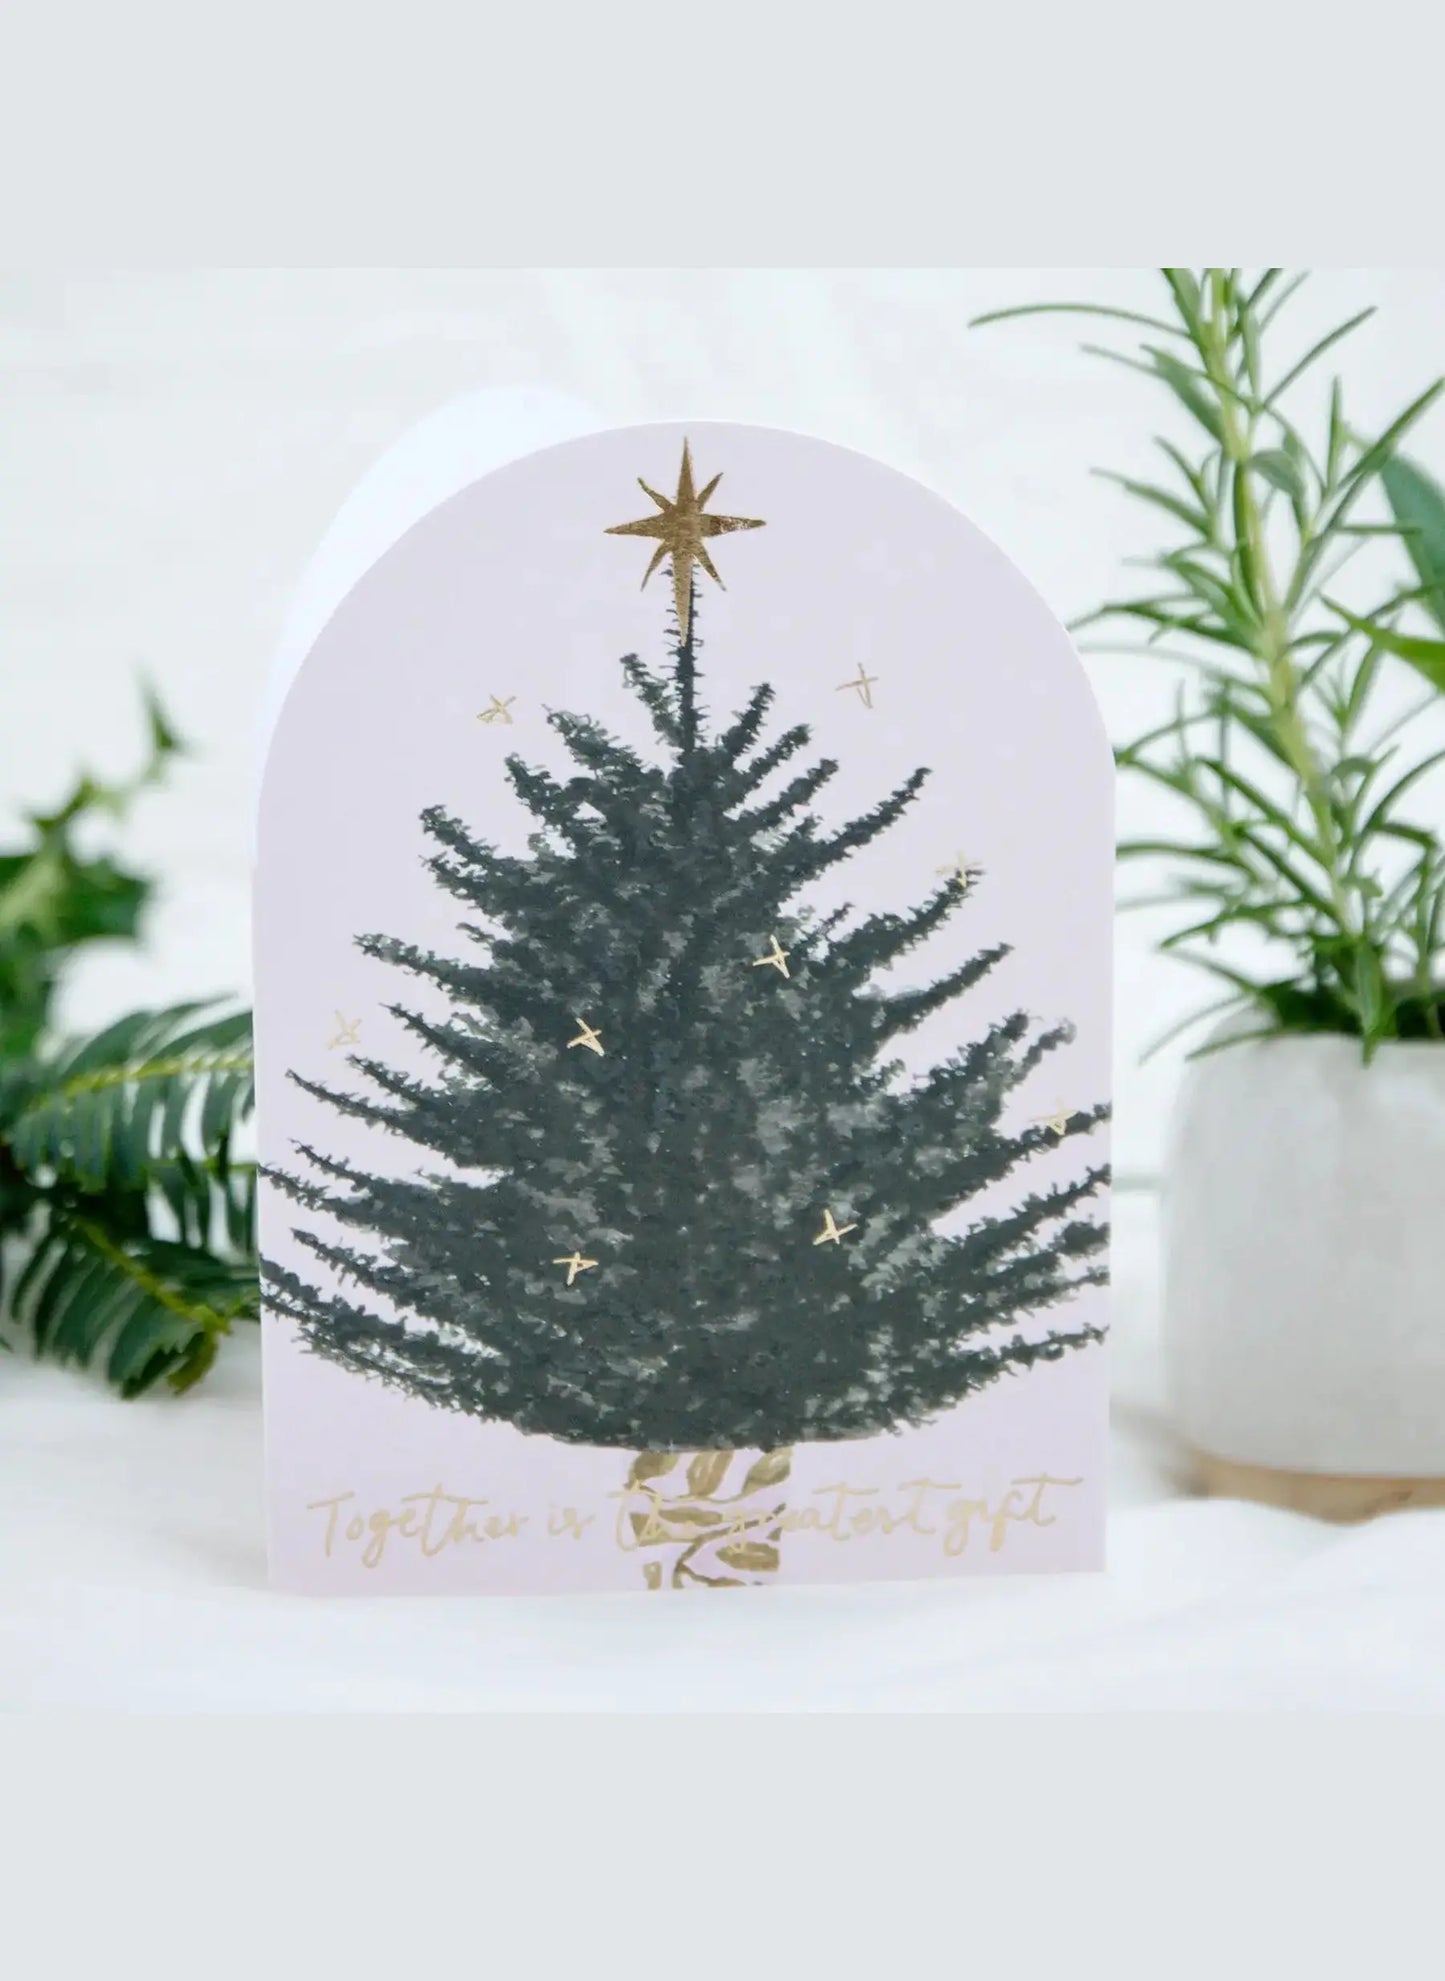 'Together Tree' Christmas Card